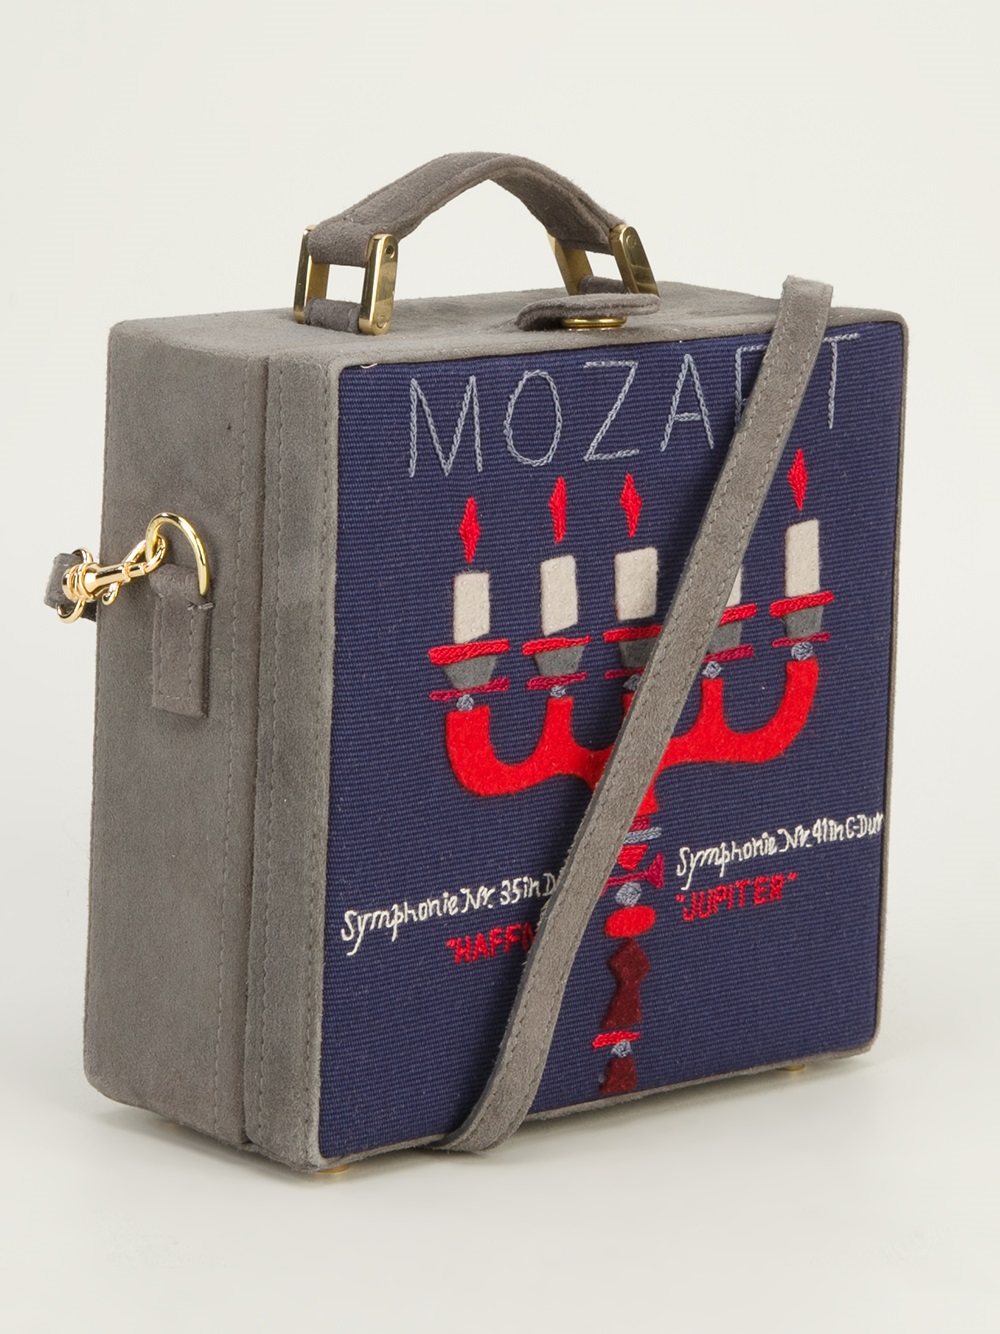 Lyst - Olympia Le-Tan Mozart Shoulder Bag in Blue